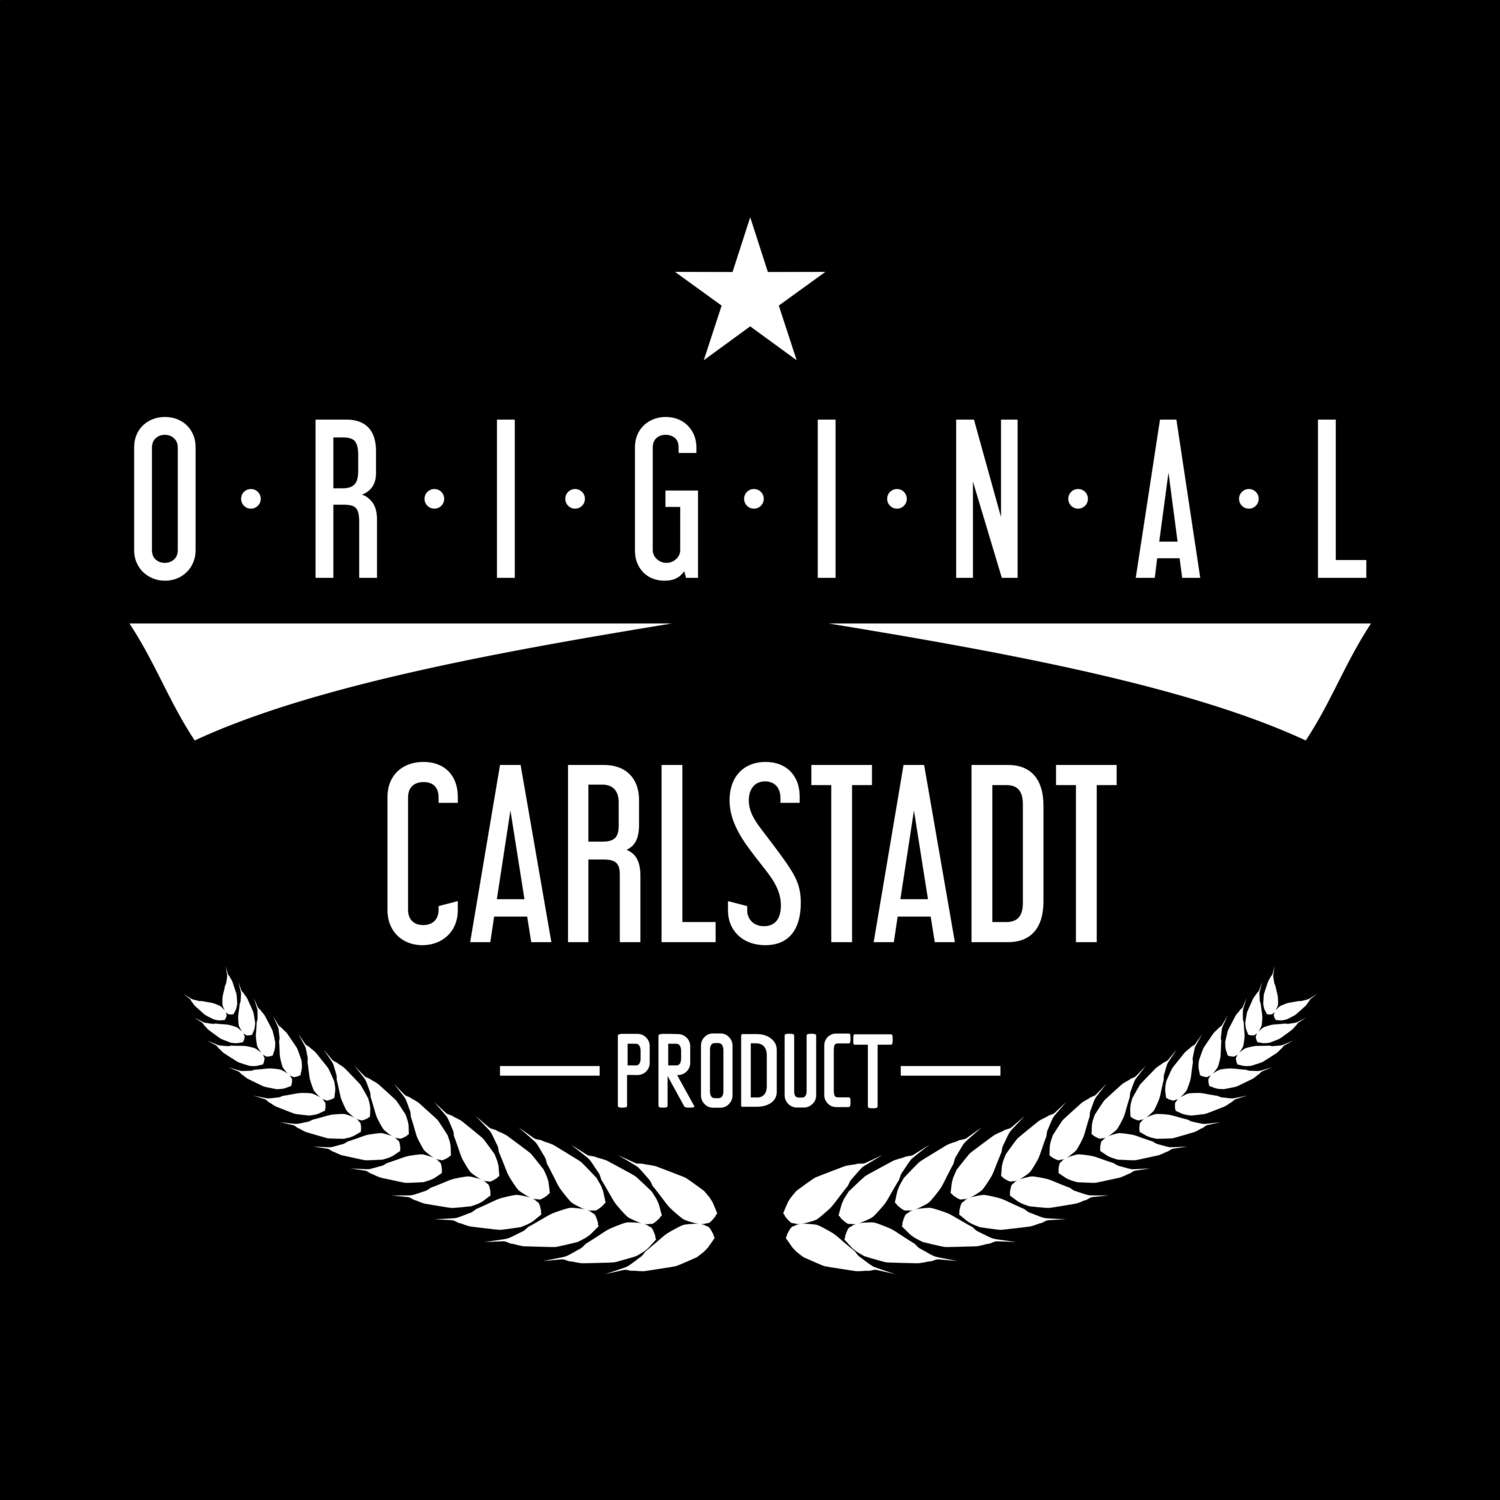 Carlstadt T-Shirt »Original Product«